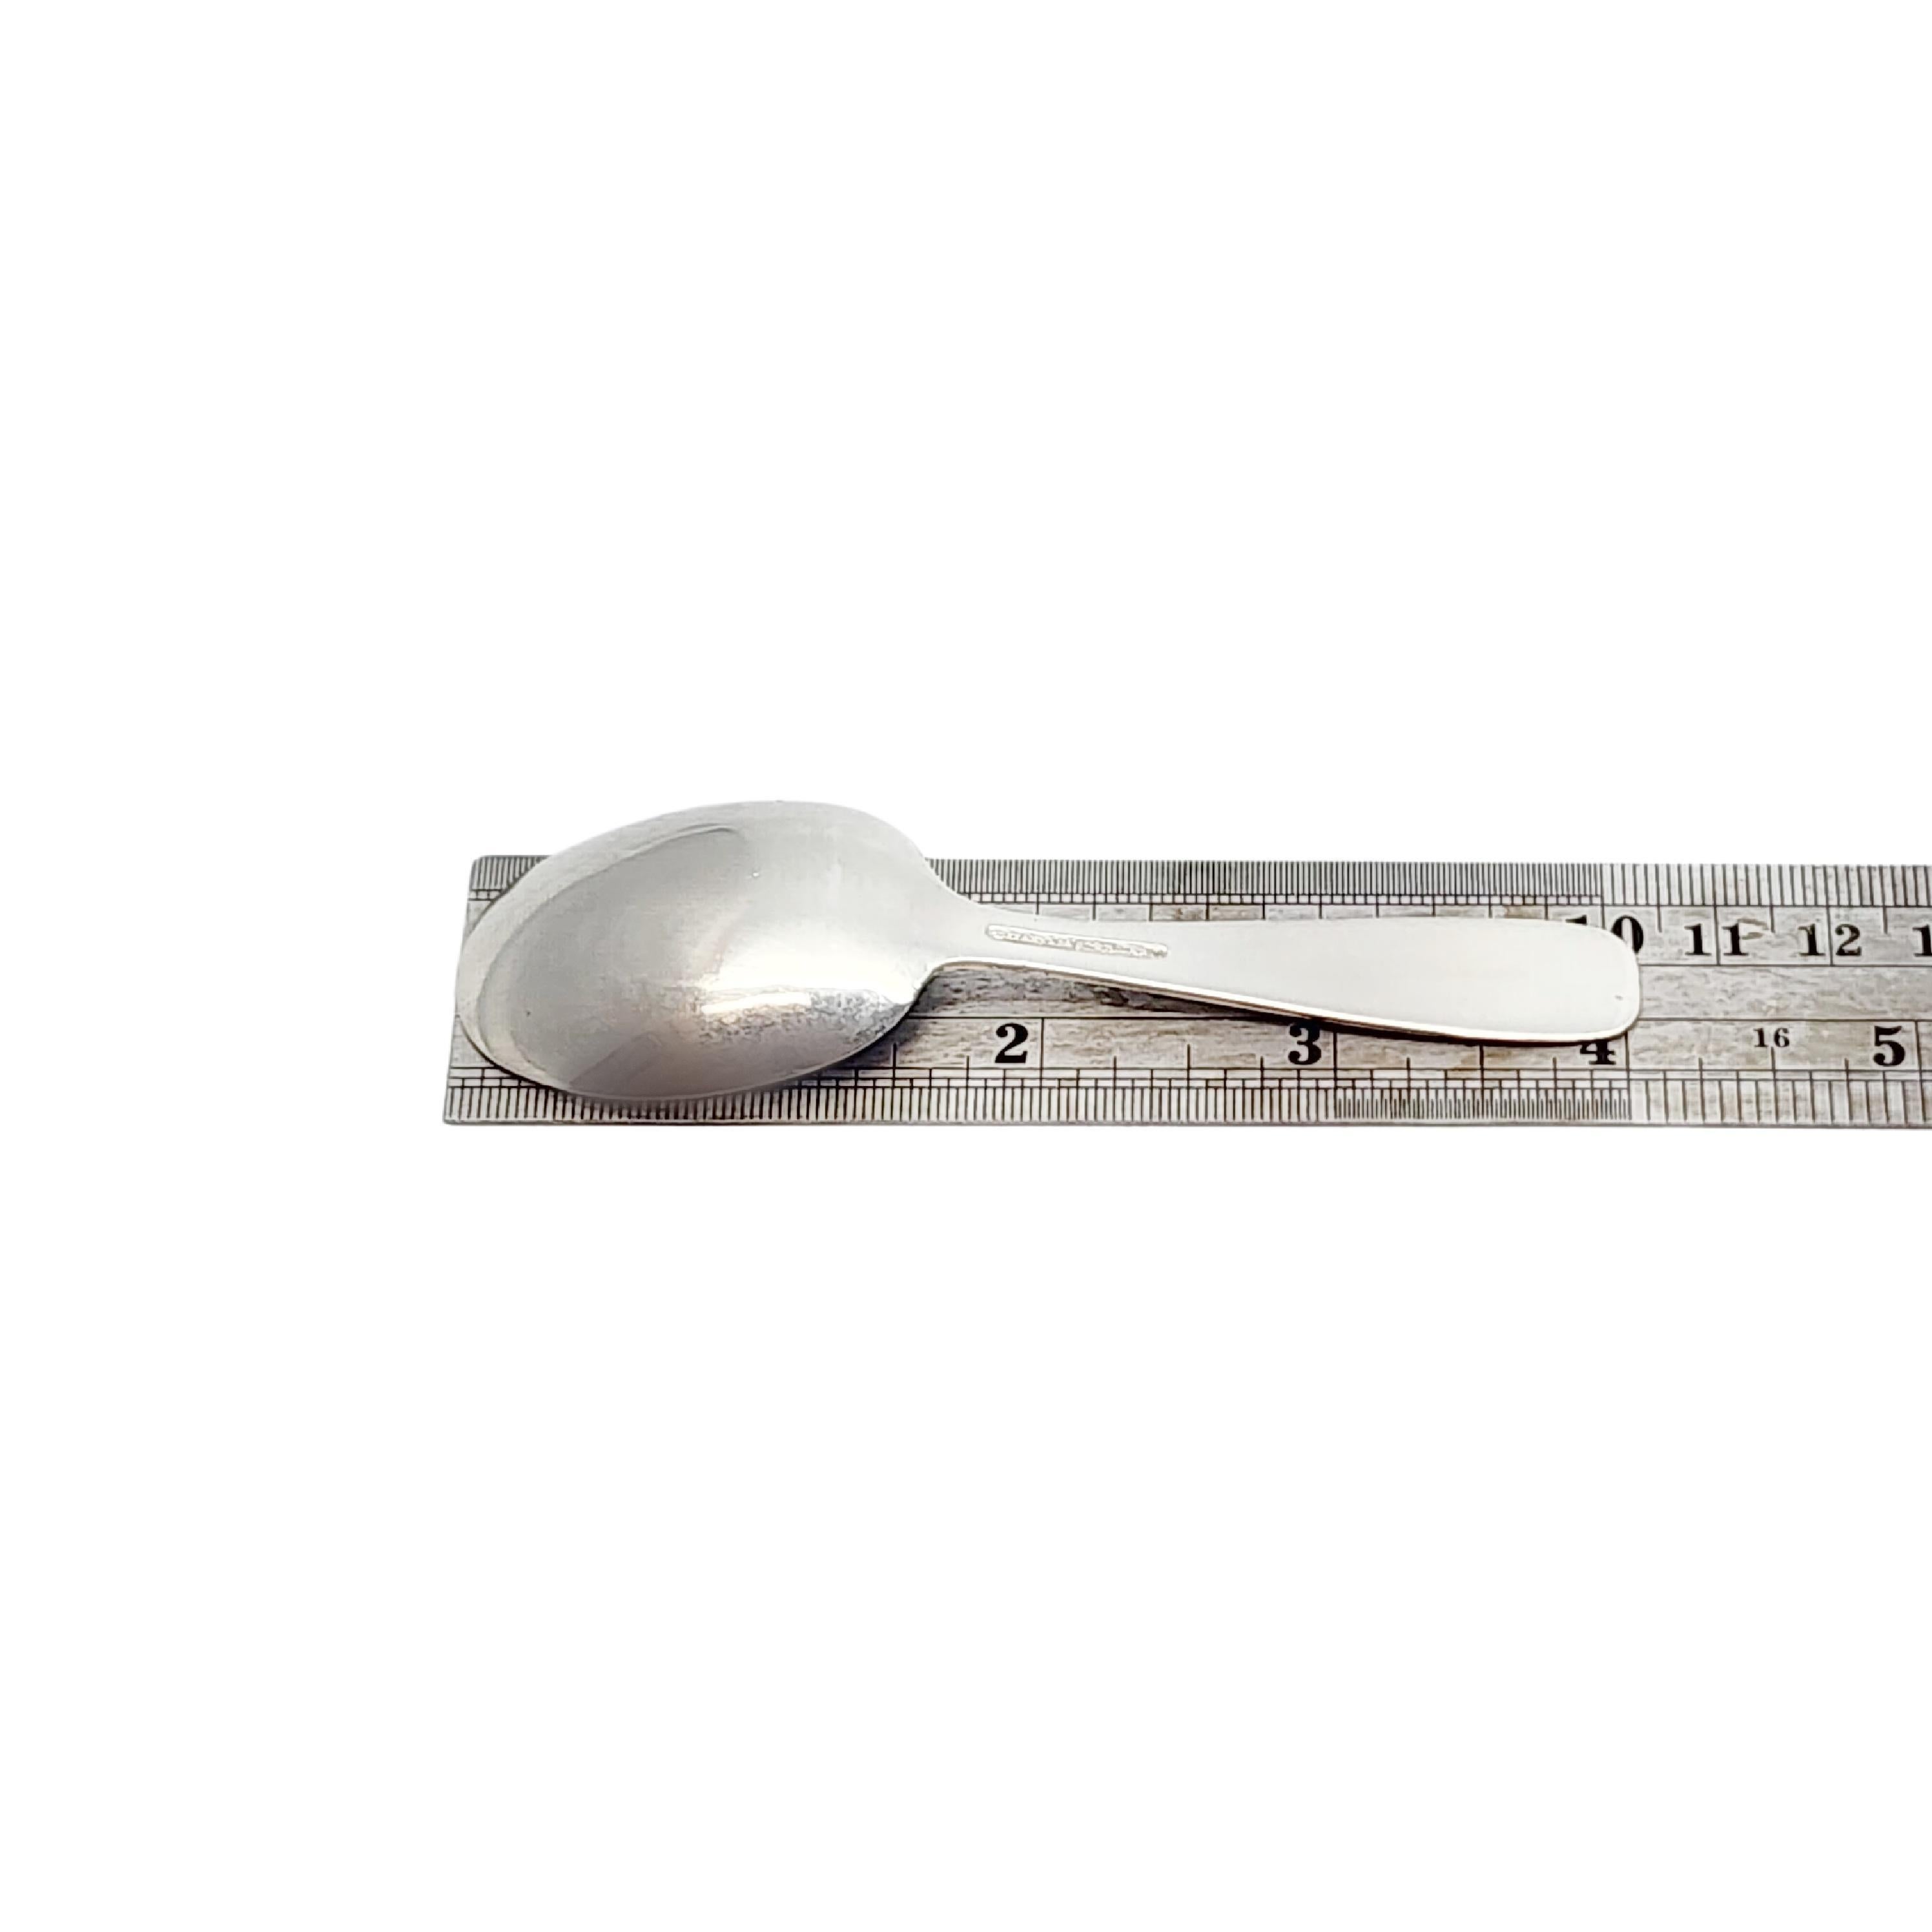 Tiffany & Co Sterling Silver Baby/Child Feeding Spoon #15492 4